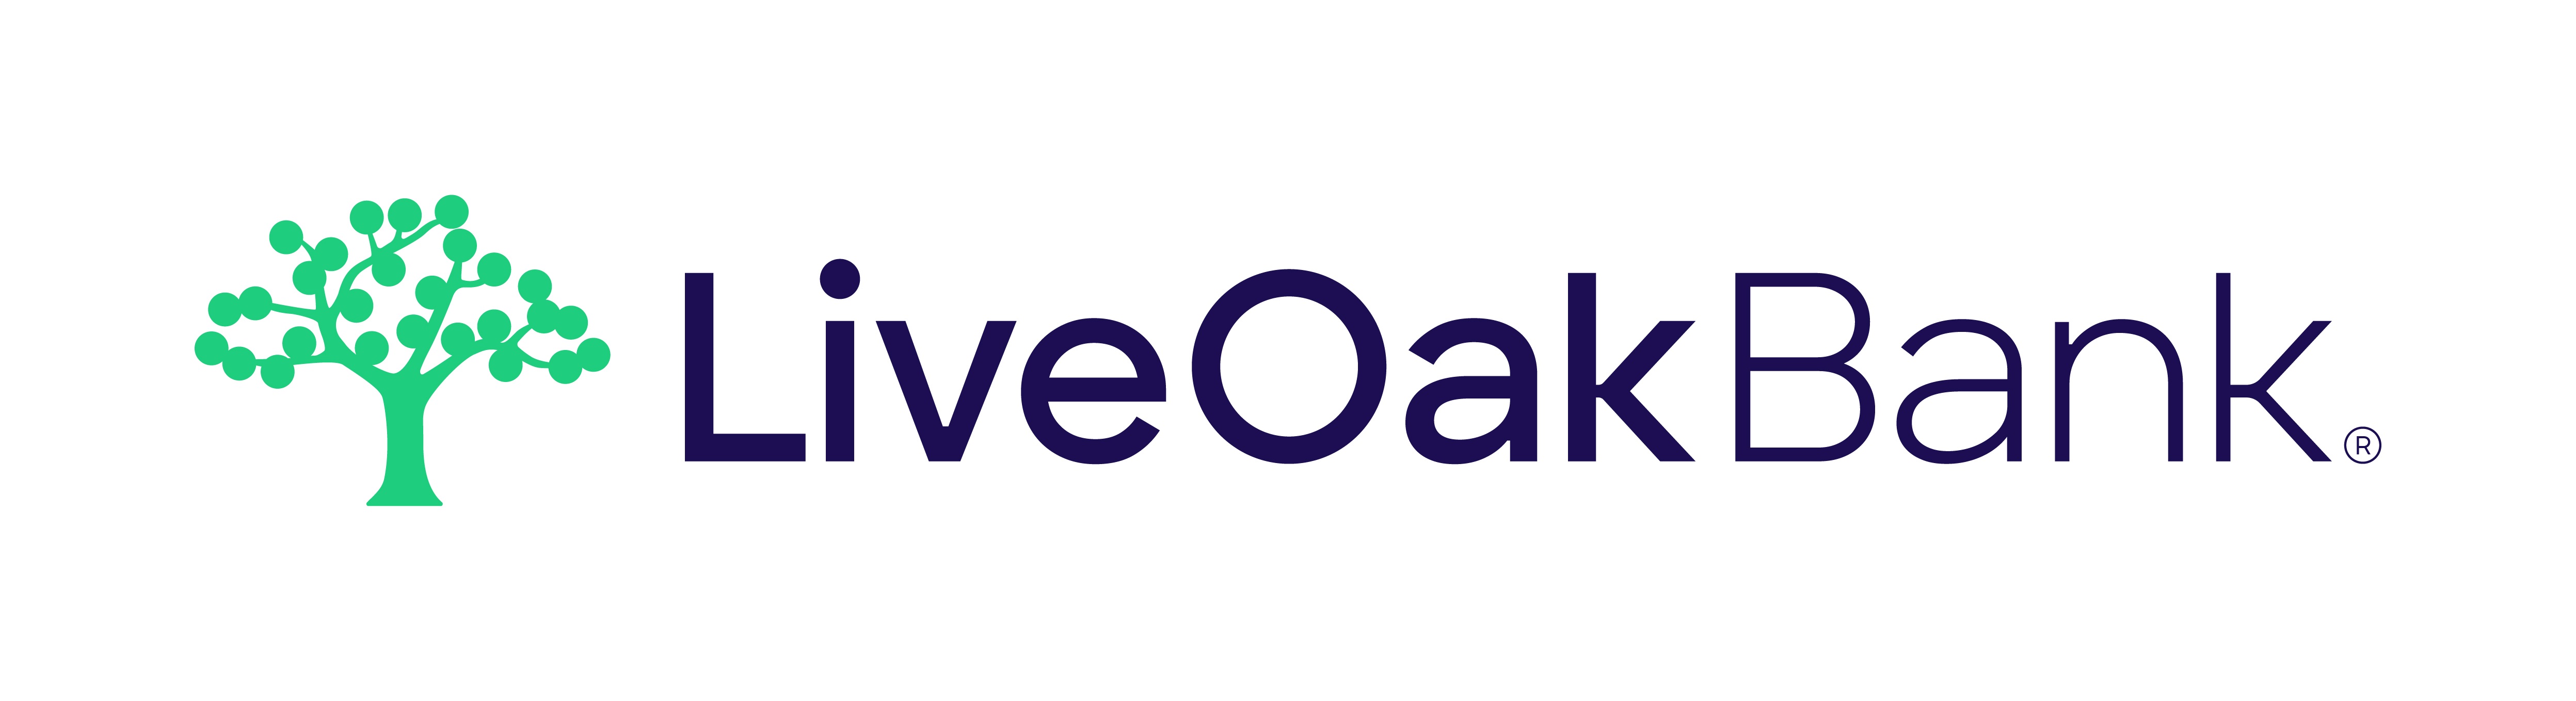 liveoak bank logo